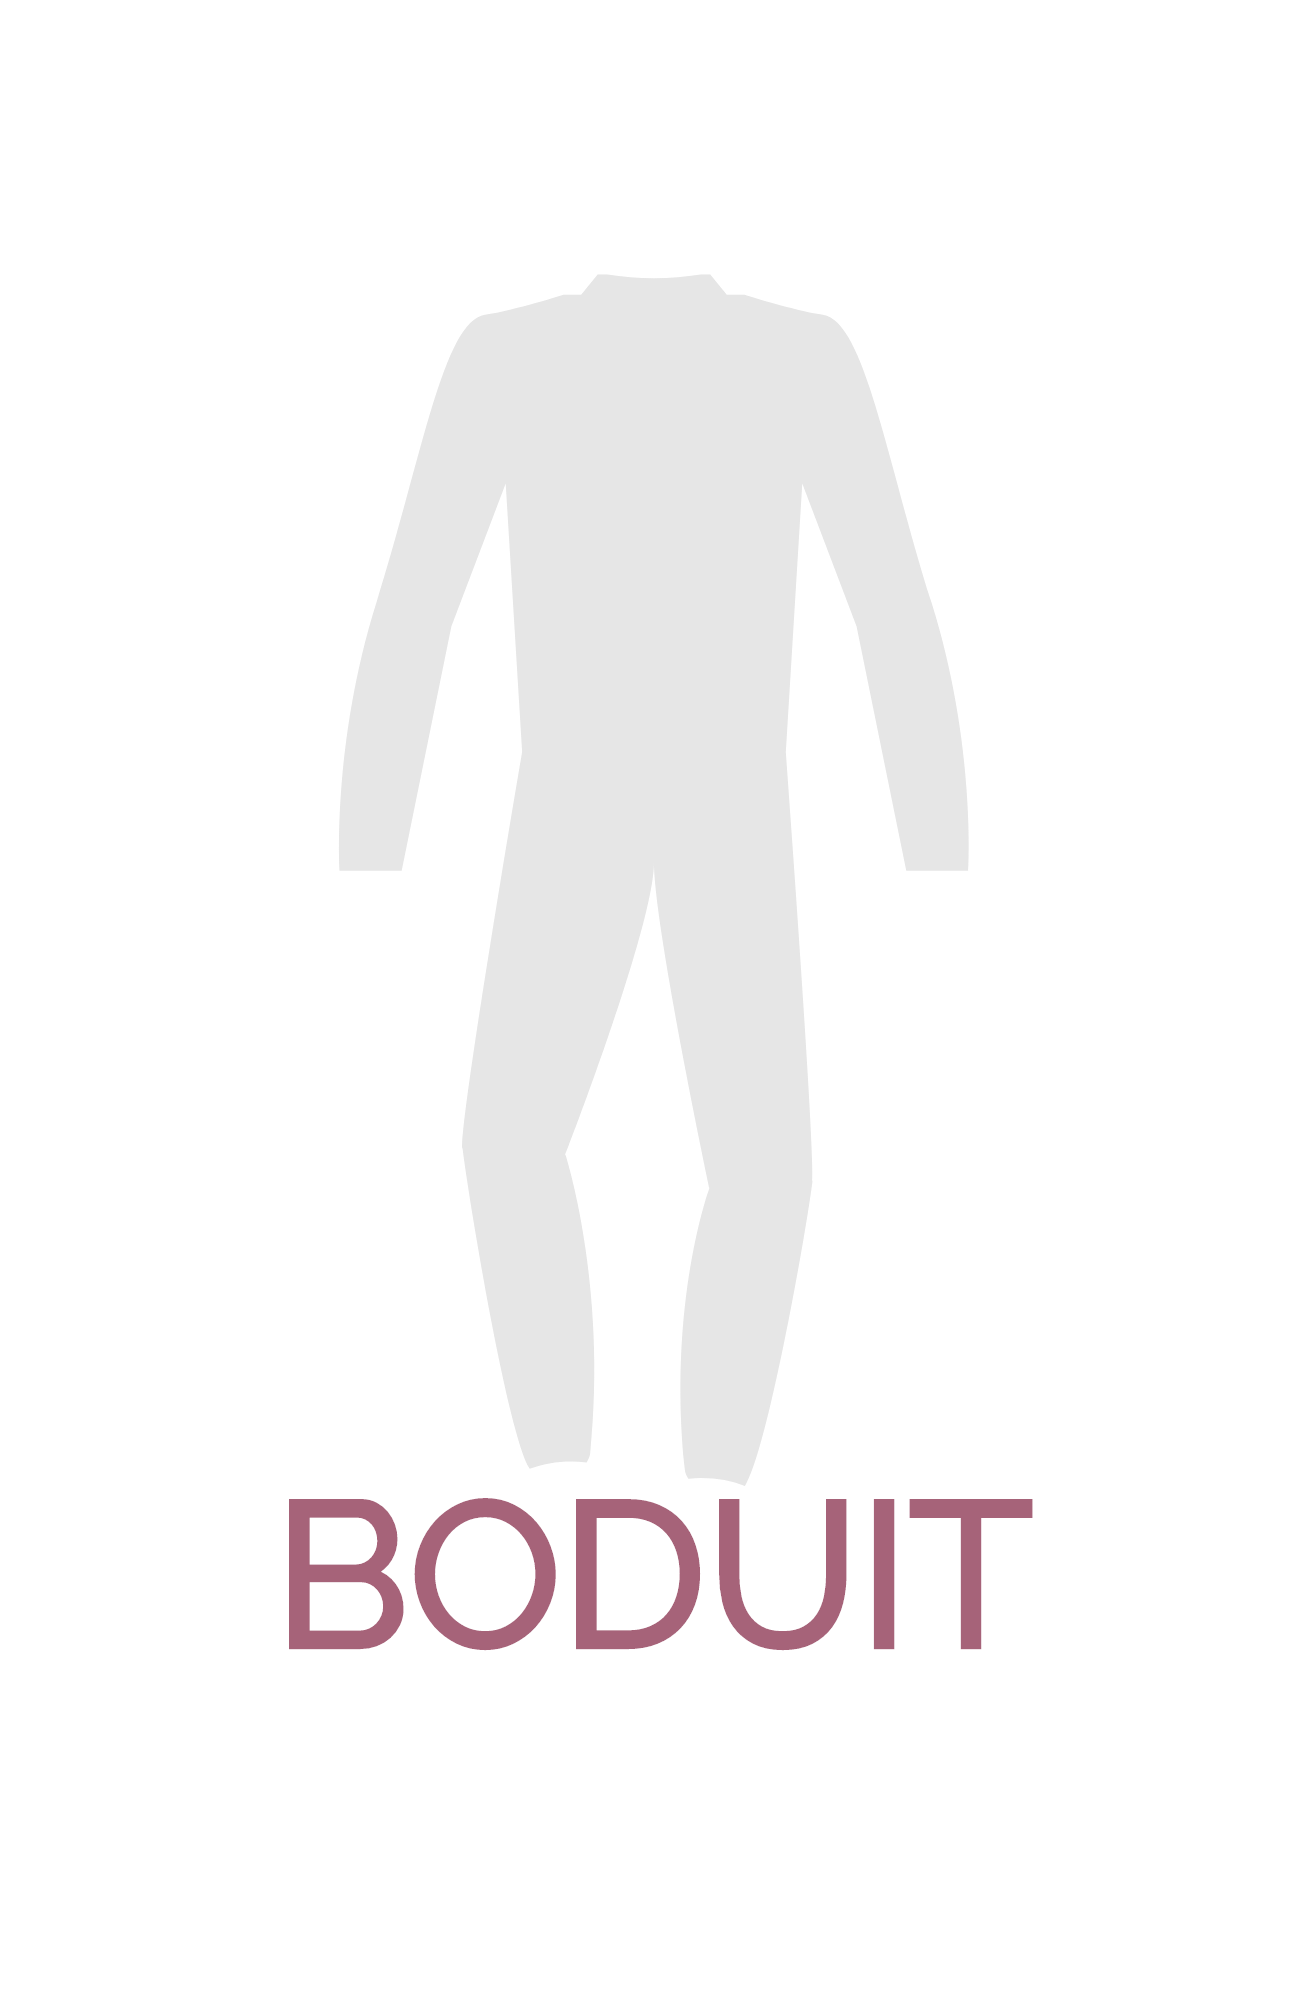 BODUIT (Copy)